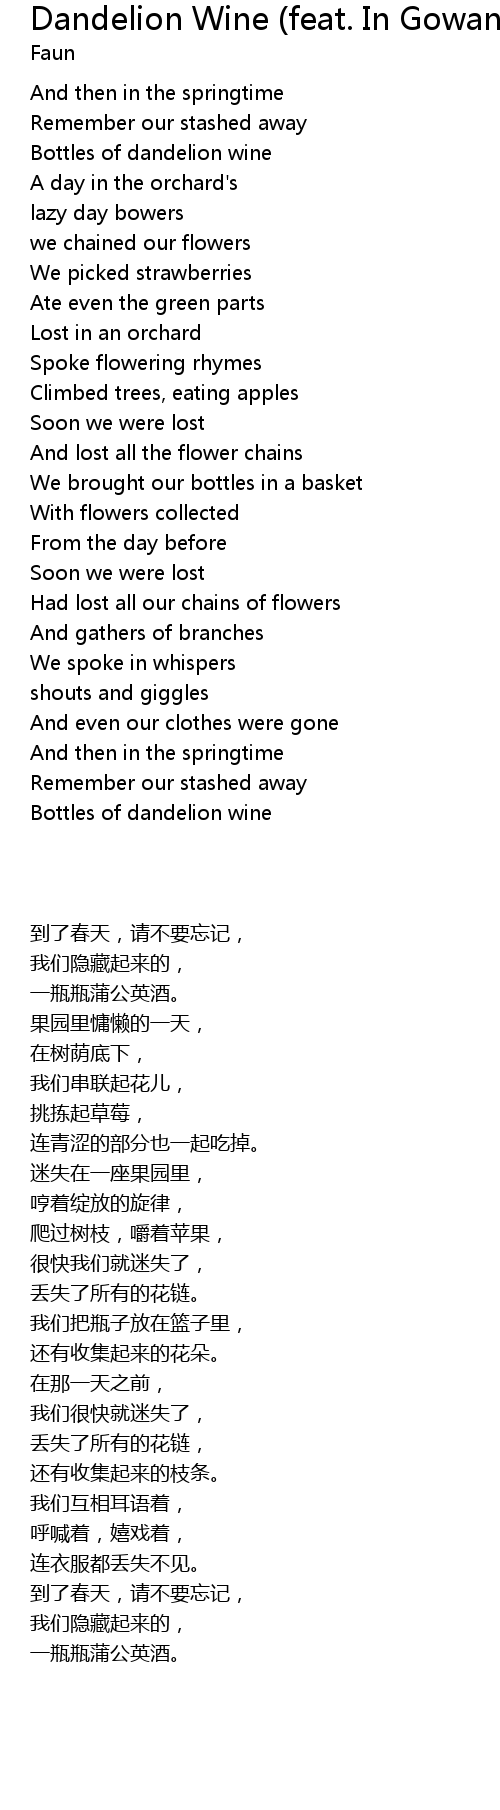 Dandelion lyrics